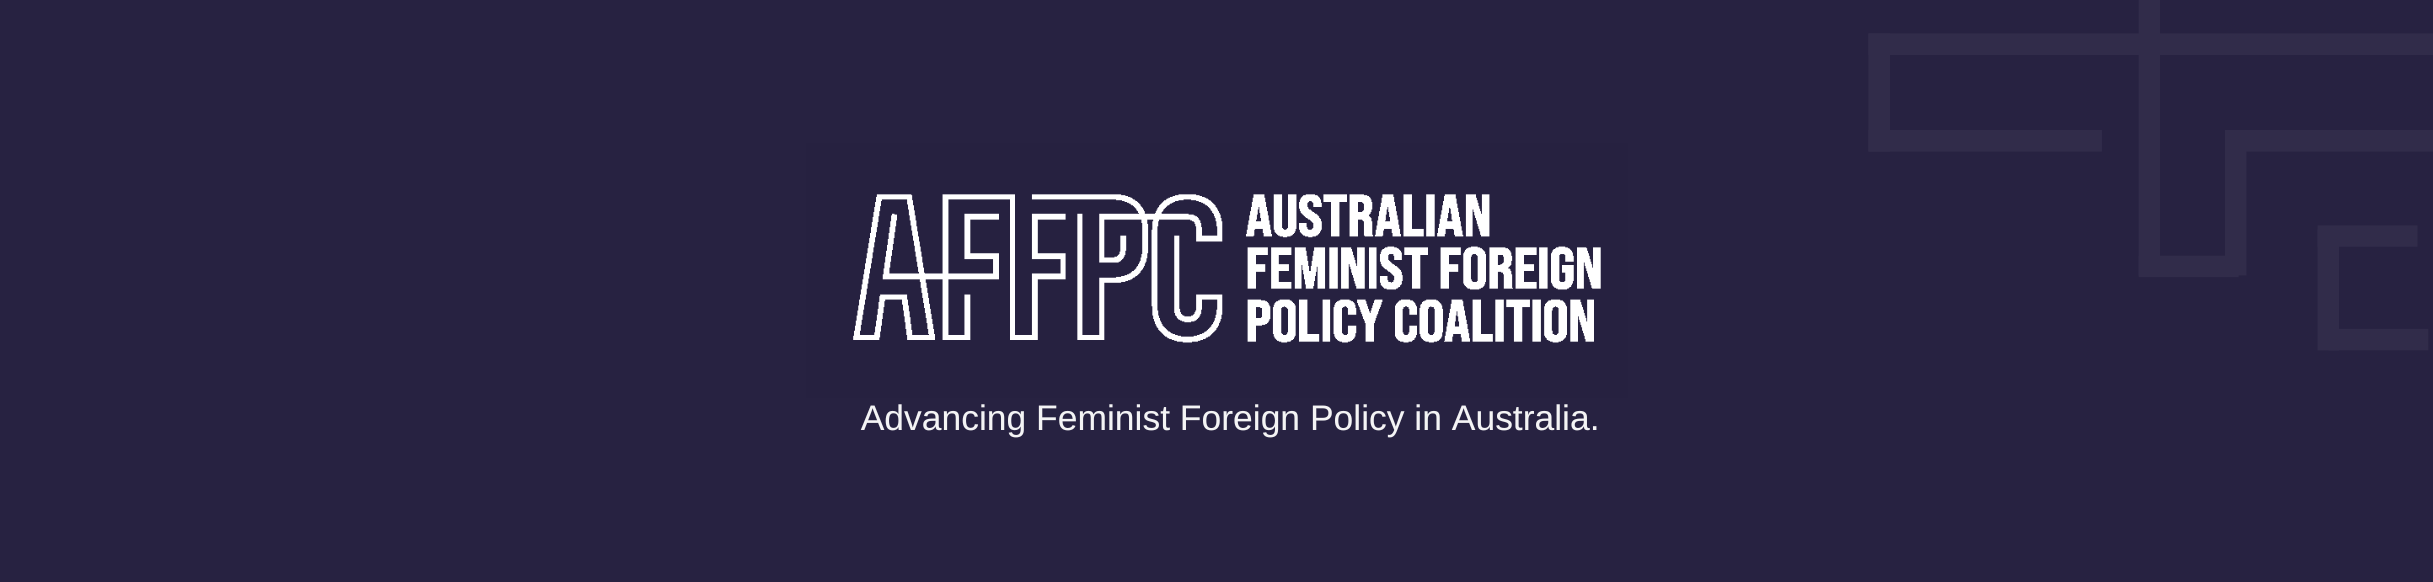 Australian Feminist Foreign Policy Coalition white logo on dark blue background